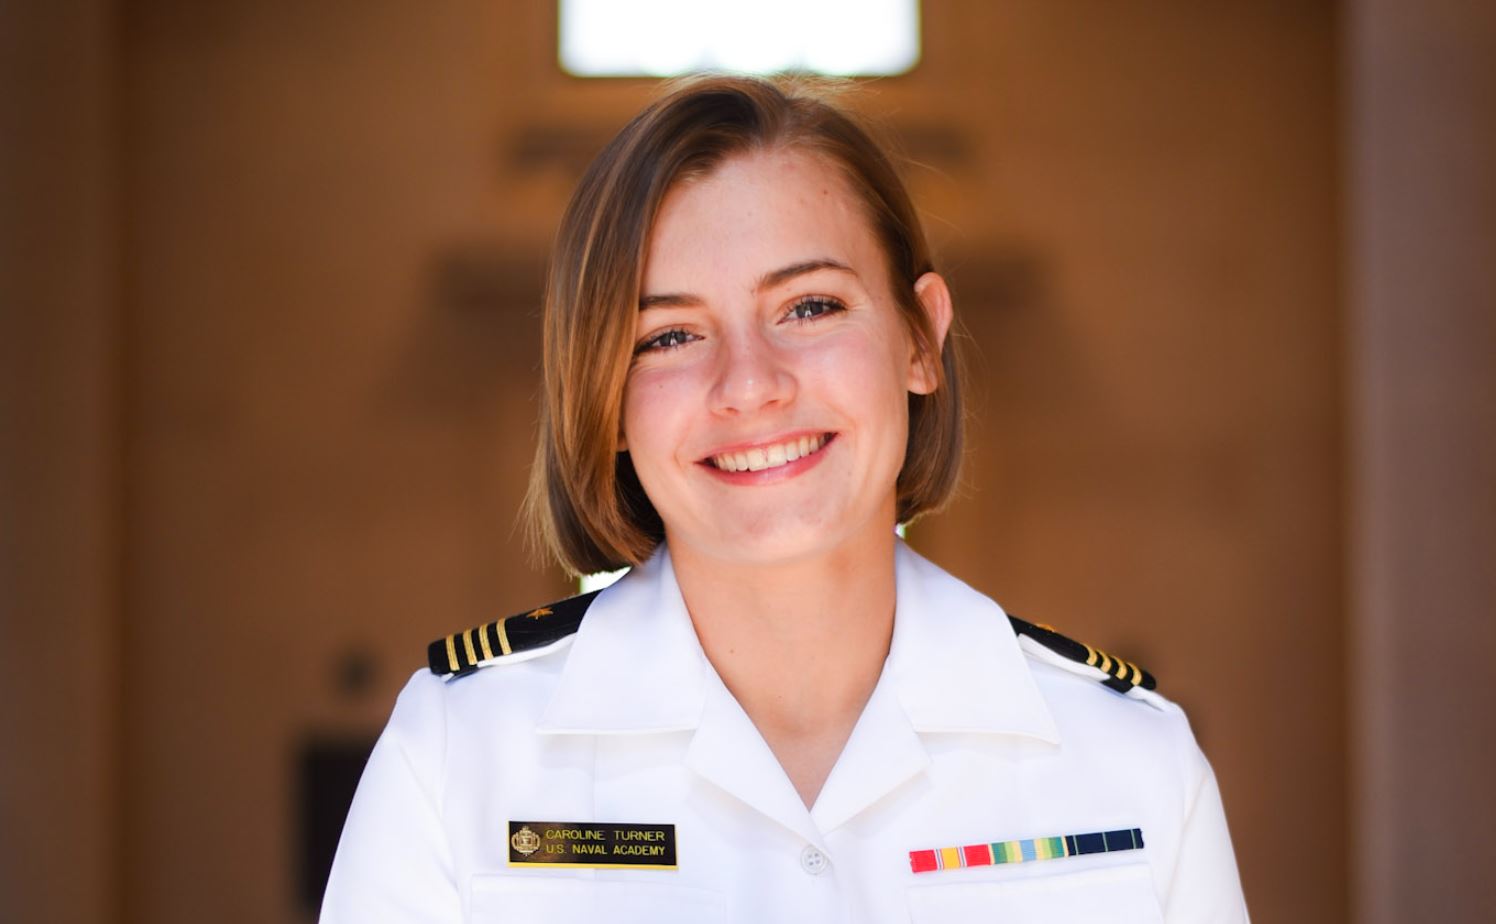 Caroline Turner in white naval uniform with blurred background.